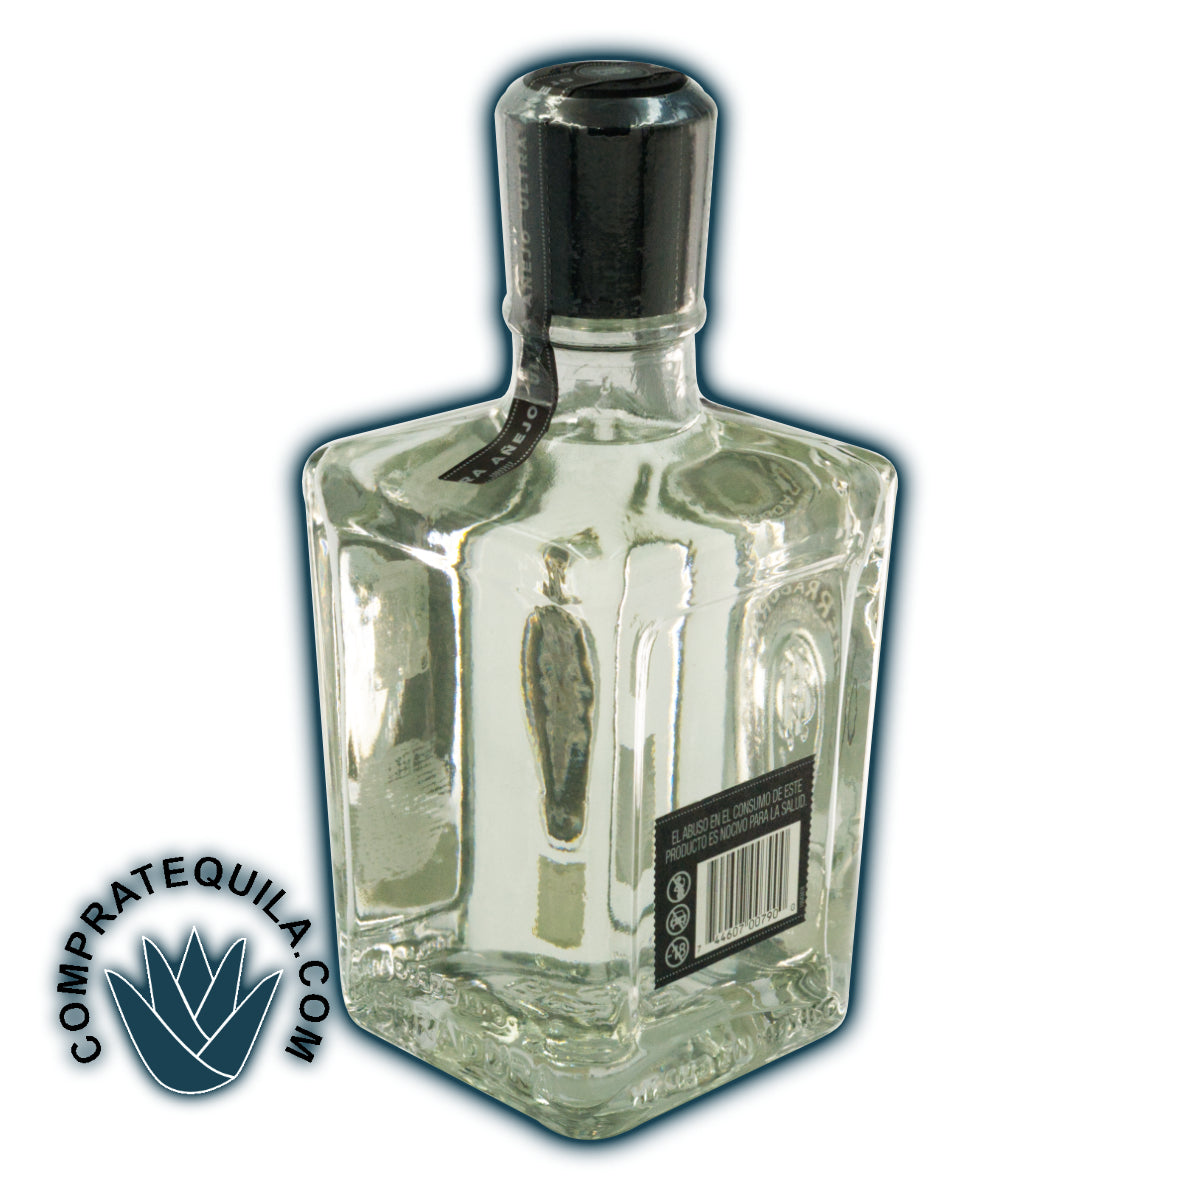 Discover the Supreme Elegance of Herradura Ultra Añejo Tequila at Compratequila.com